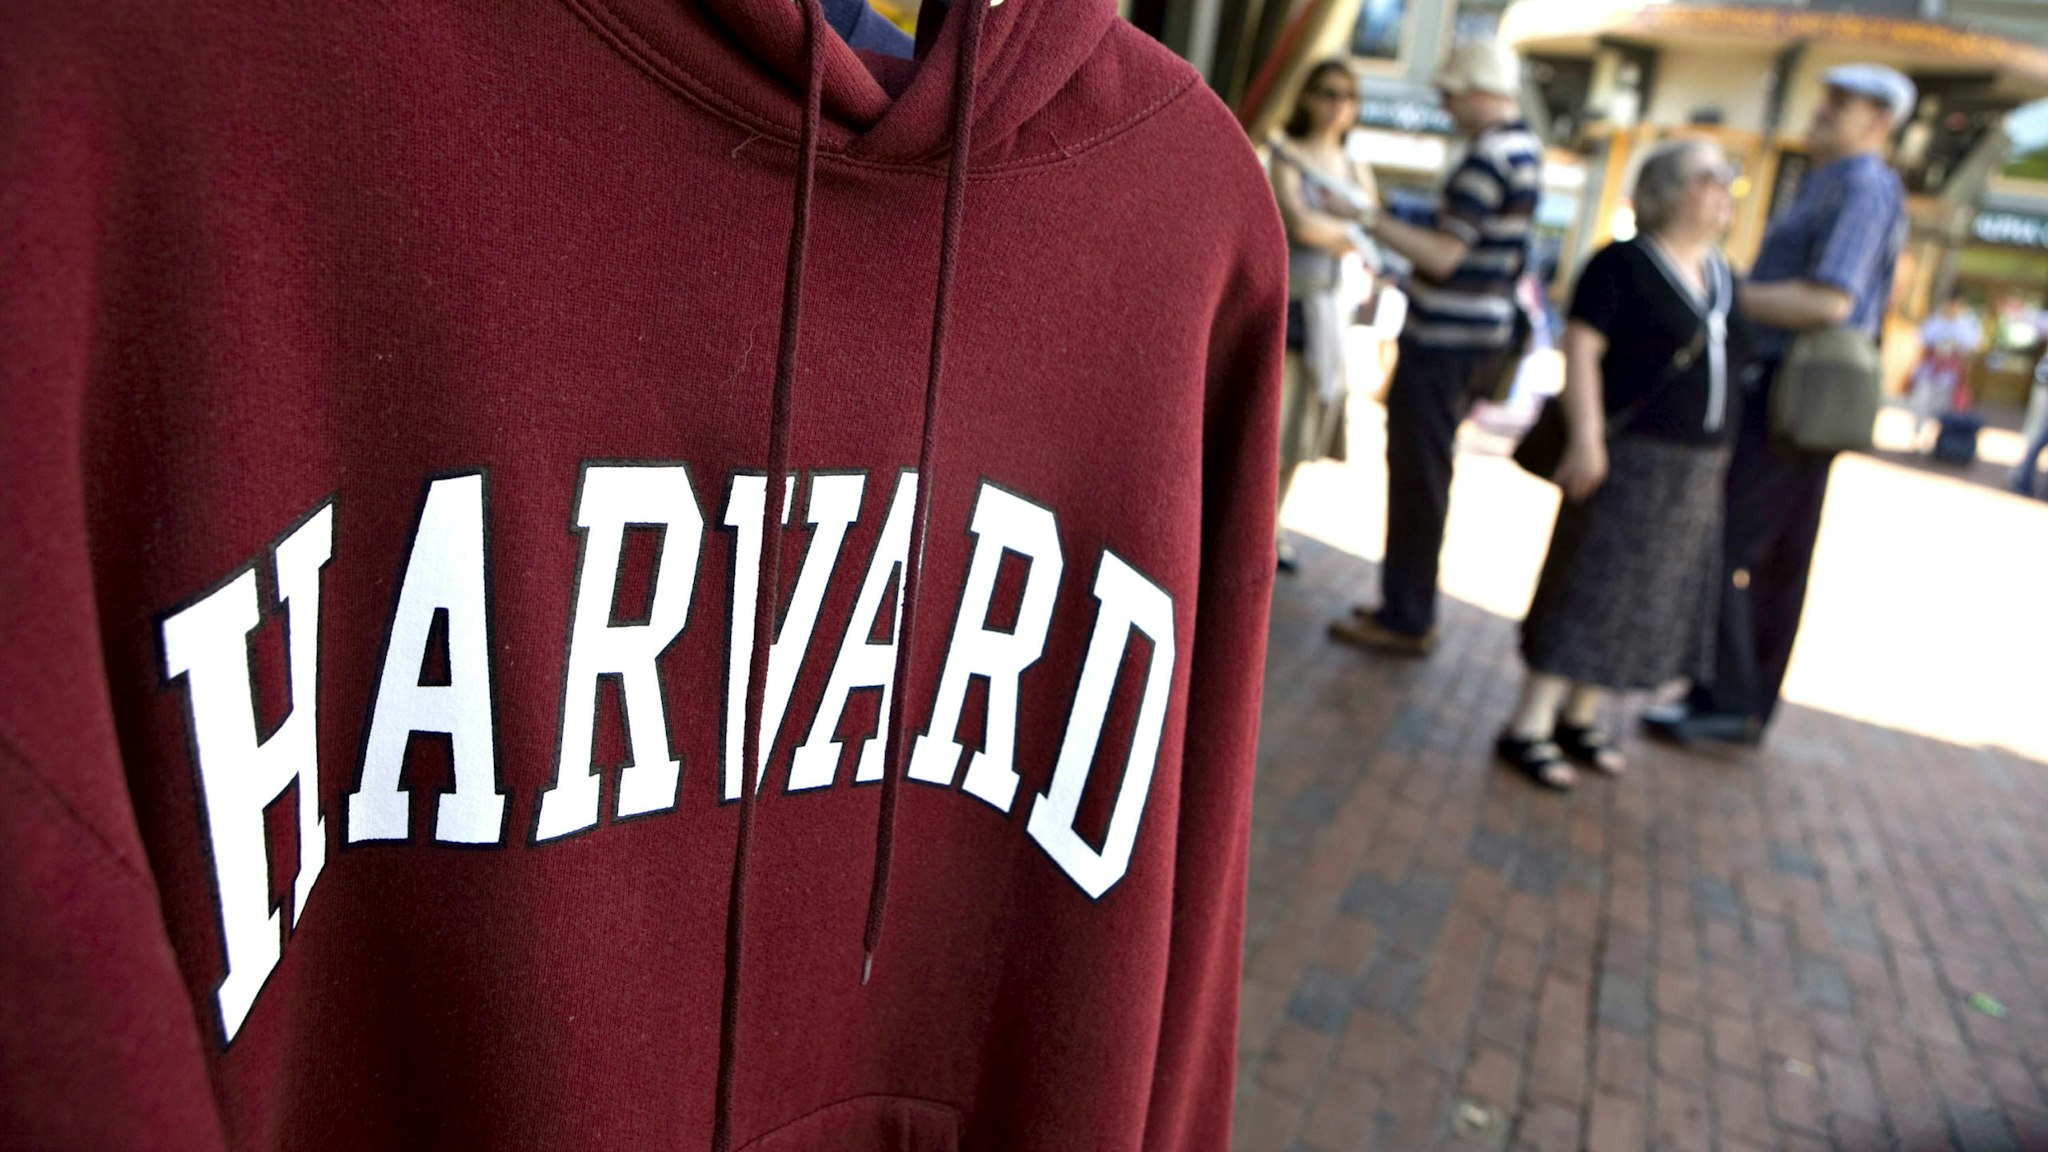 UNITED STATES - SEPTEMBER 03: A Harvard University logo appears on a sweatshirt on display in Harvard Square in Cambridge, Massachusetts, U.S., on Friday, Sept. 4, 2009.